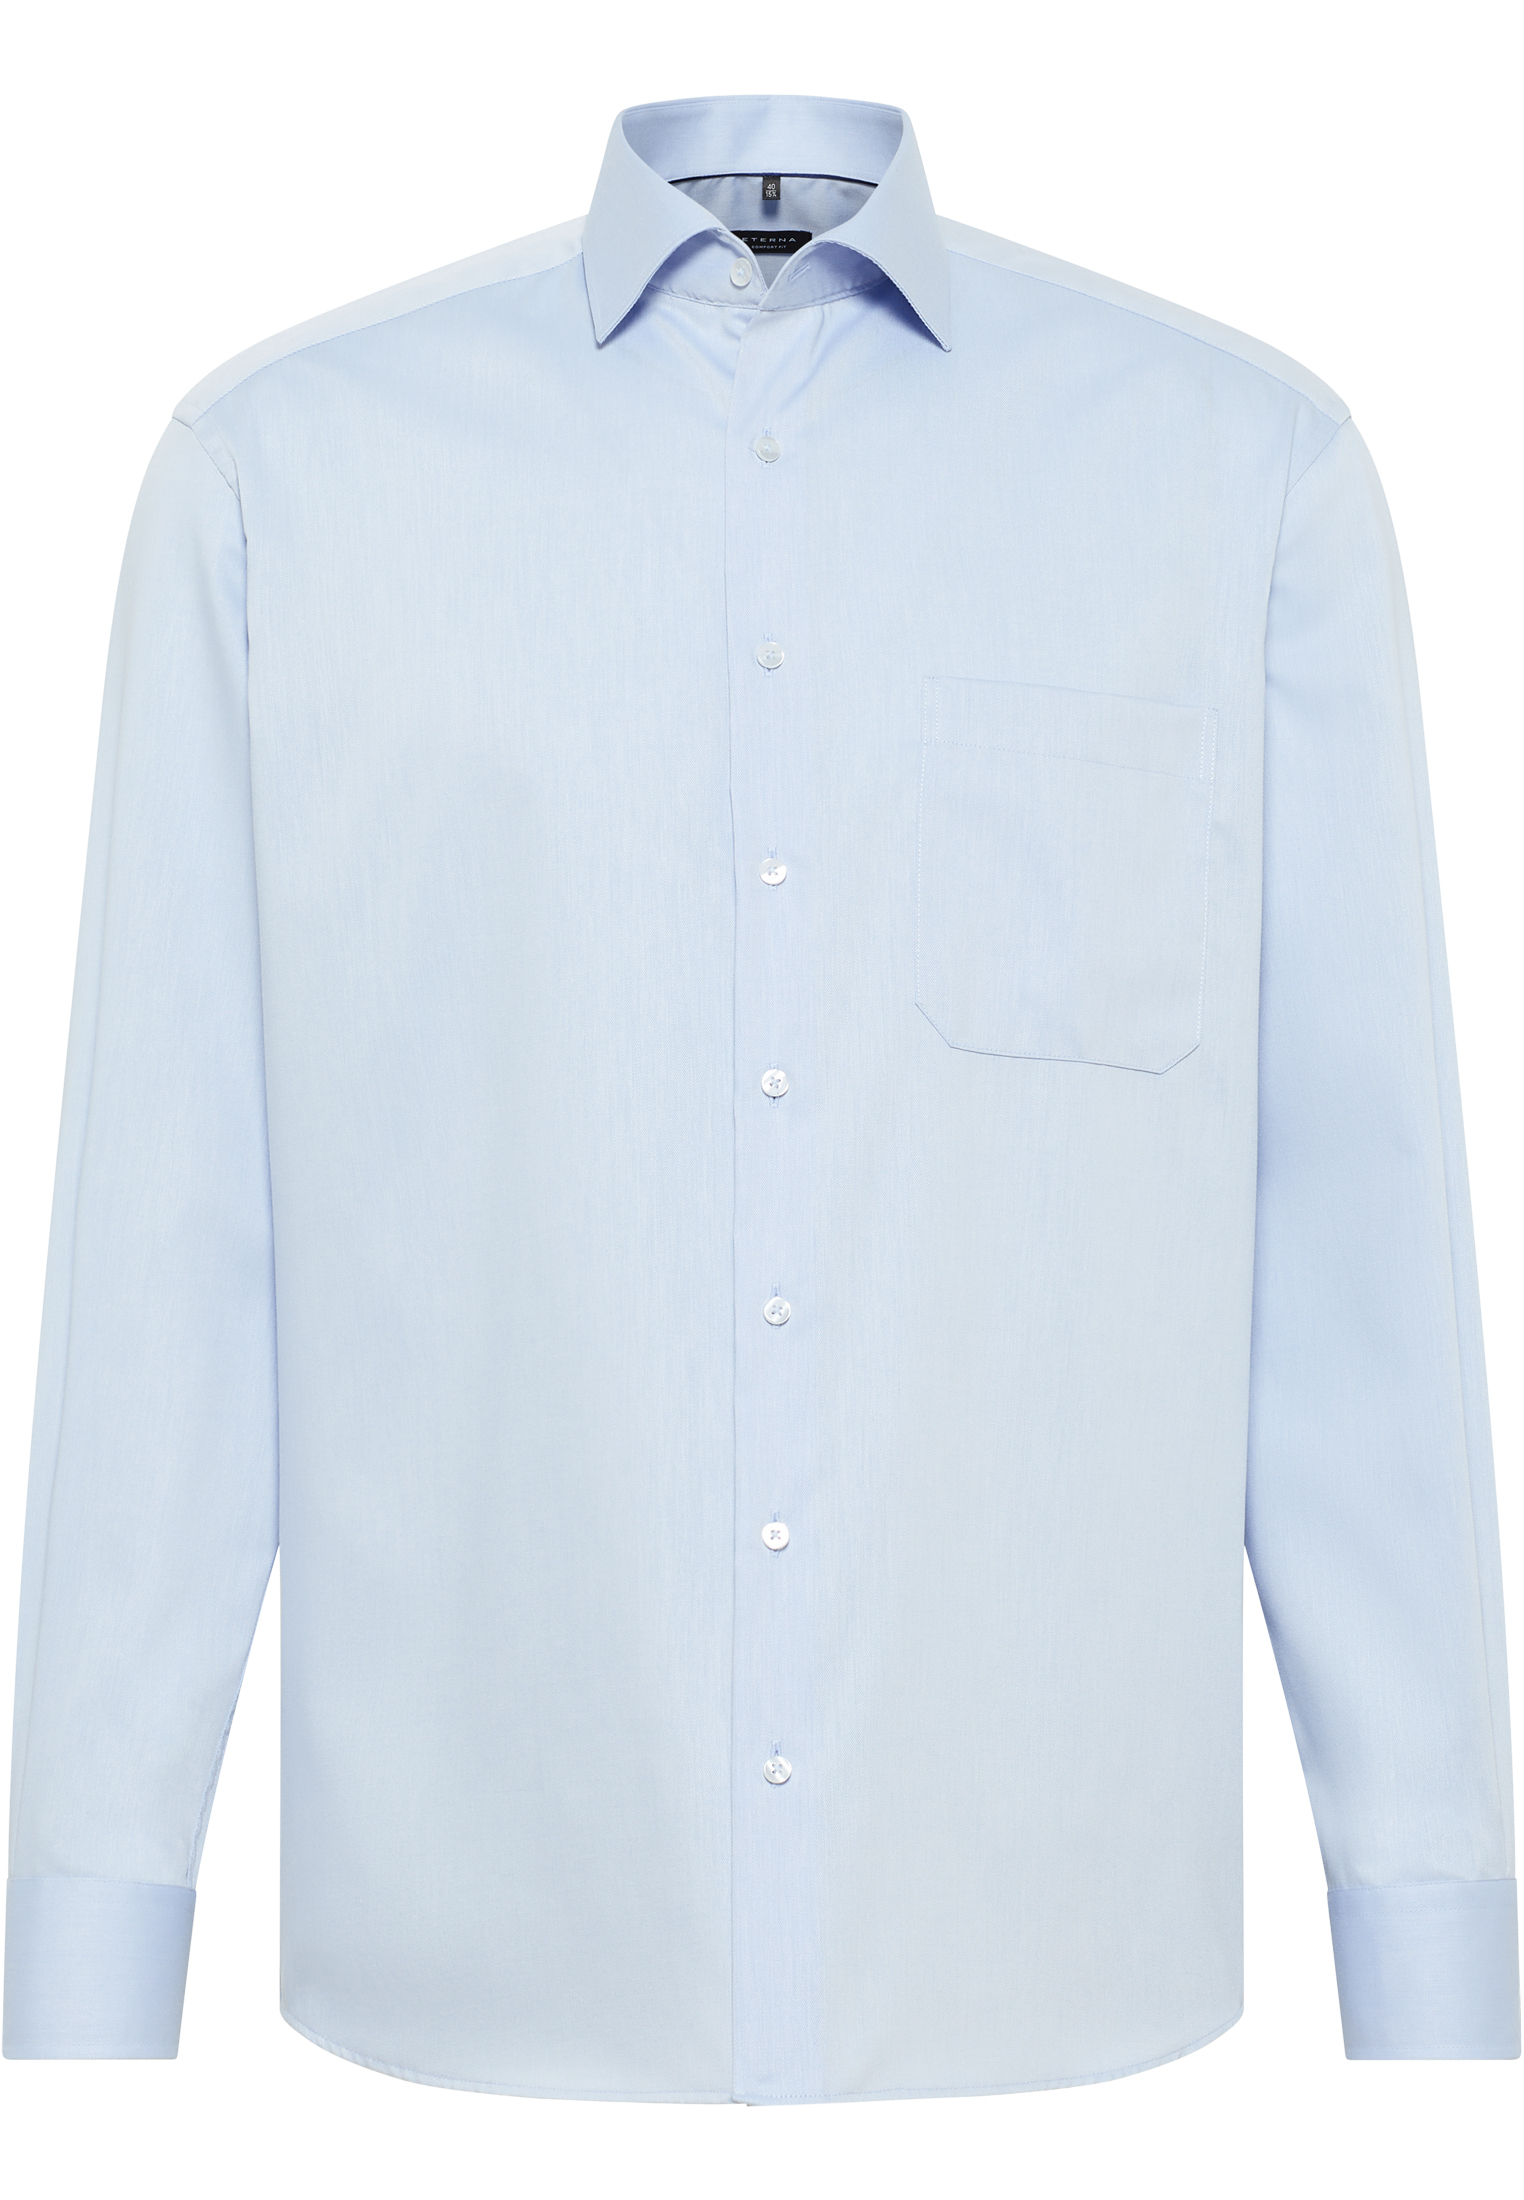 COMFORT FIT Shirt in sky blue plain